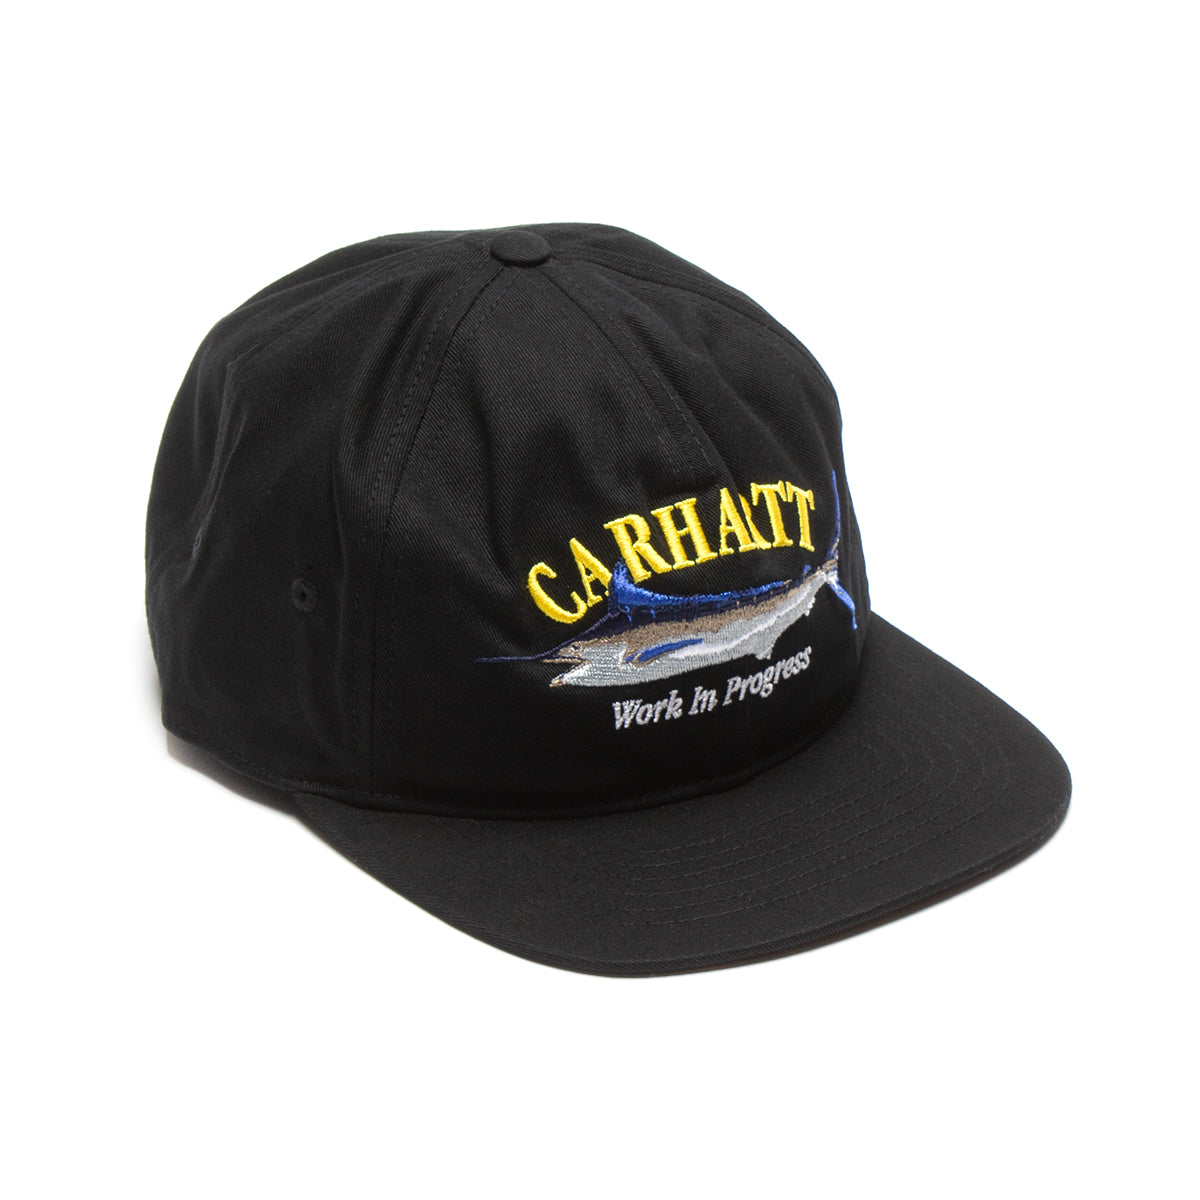 Carhartt WIP | Marlin Cap Style # I031644-89XX Color : Black